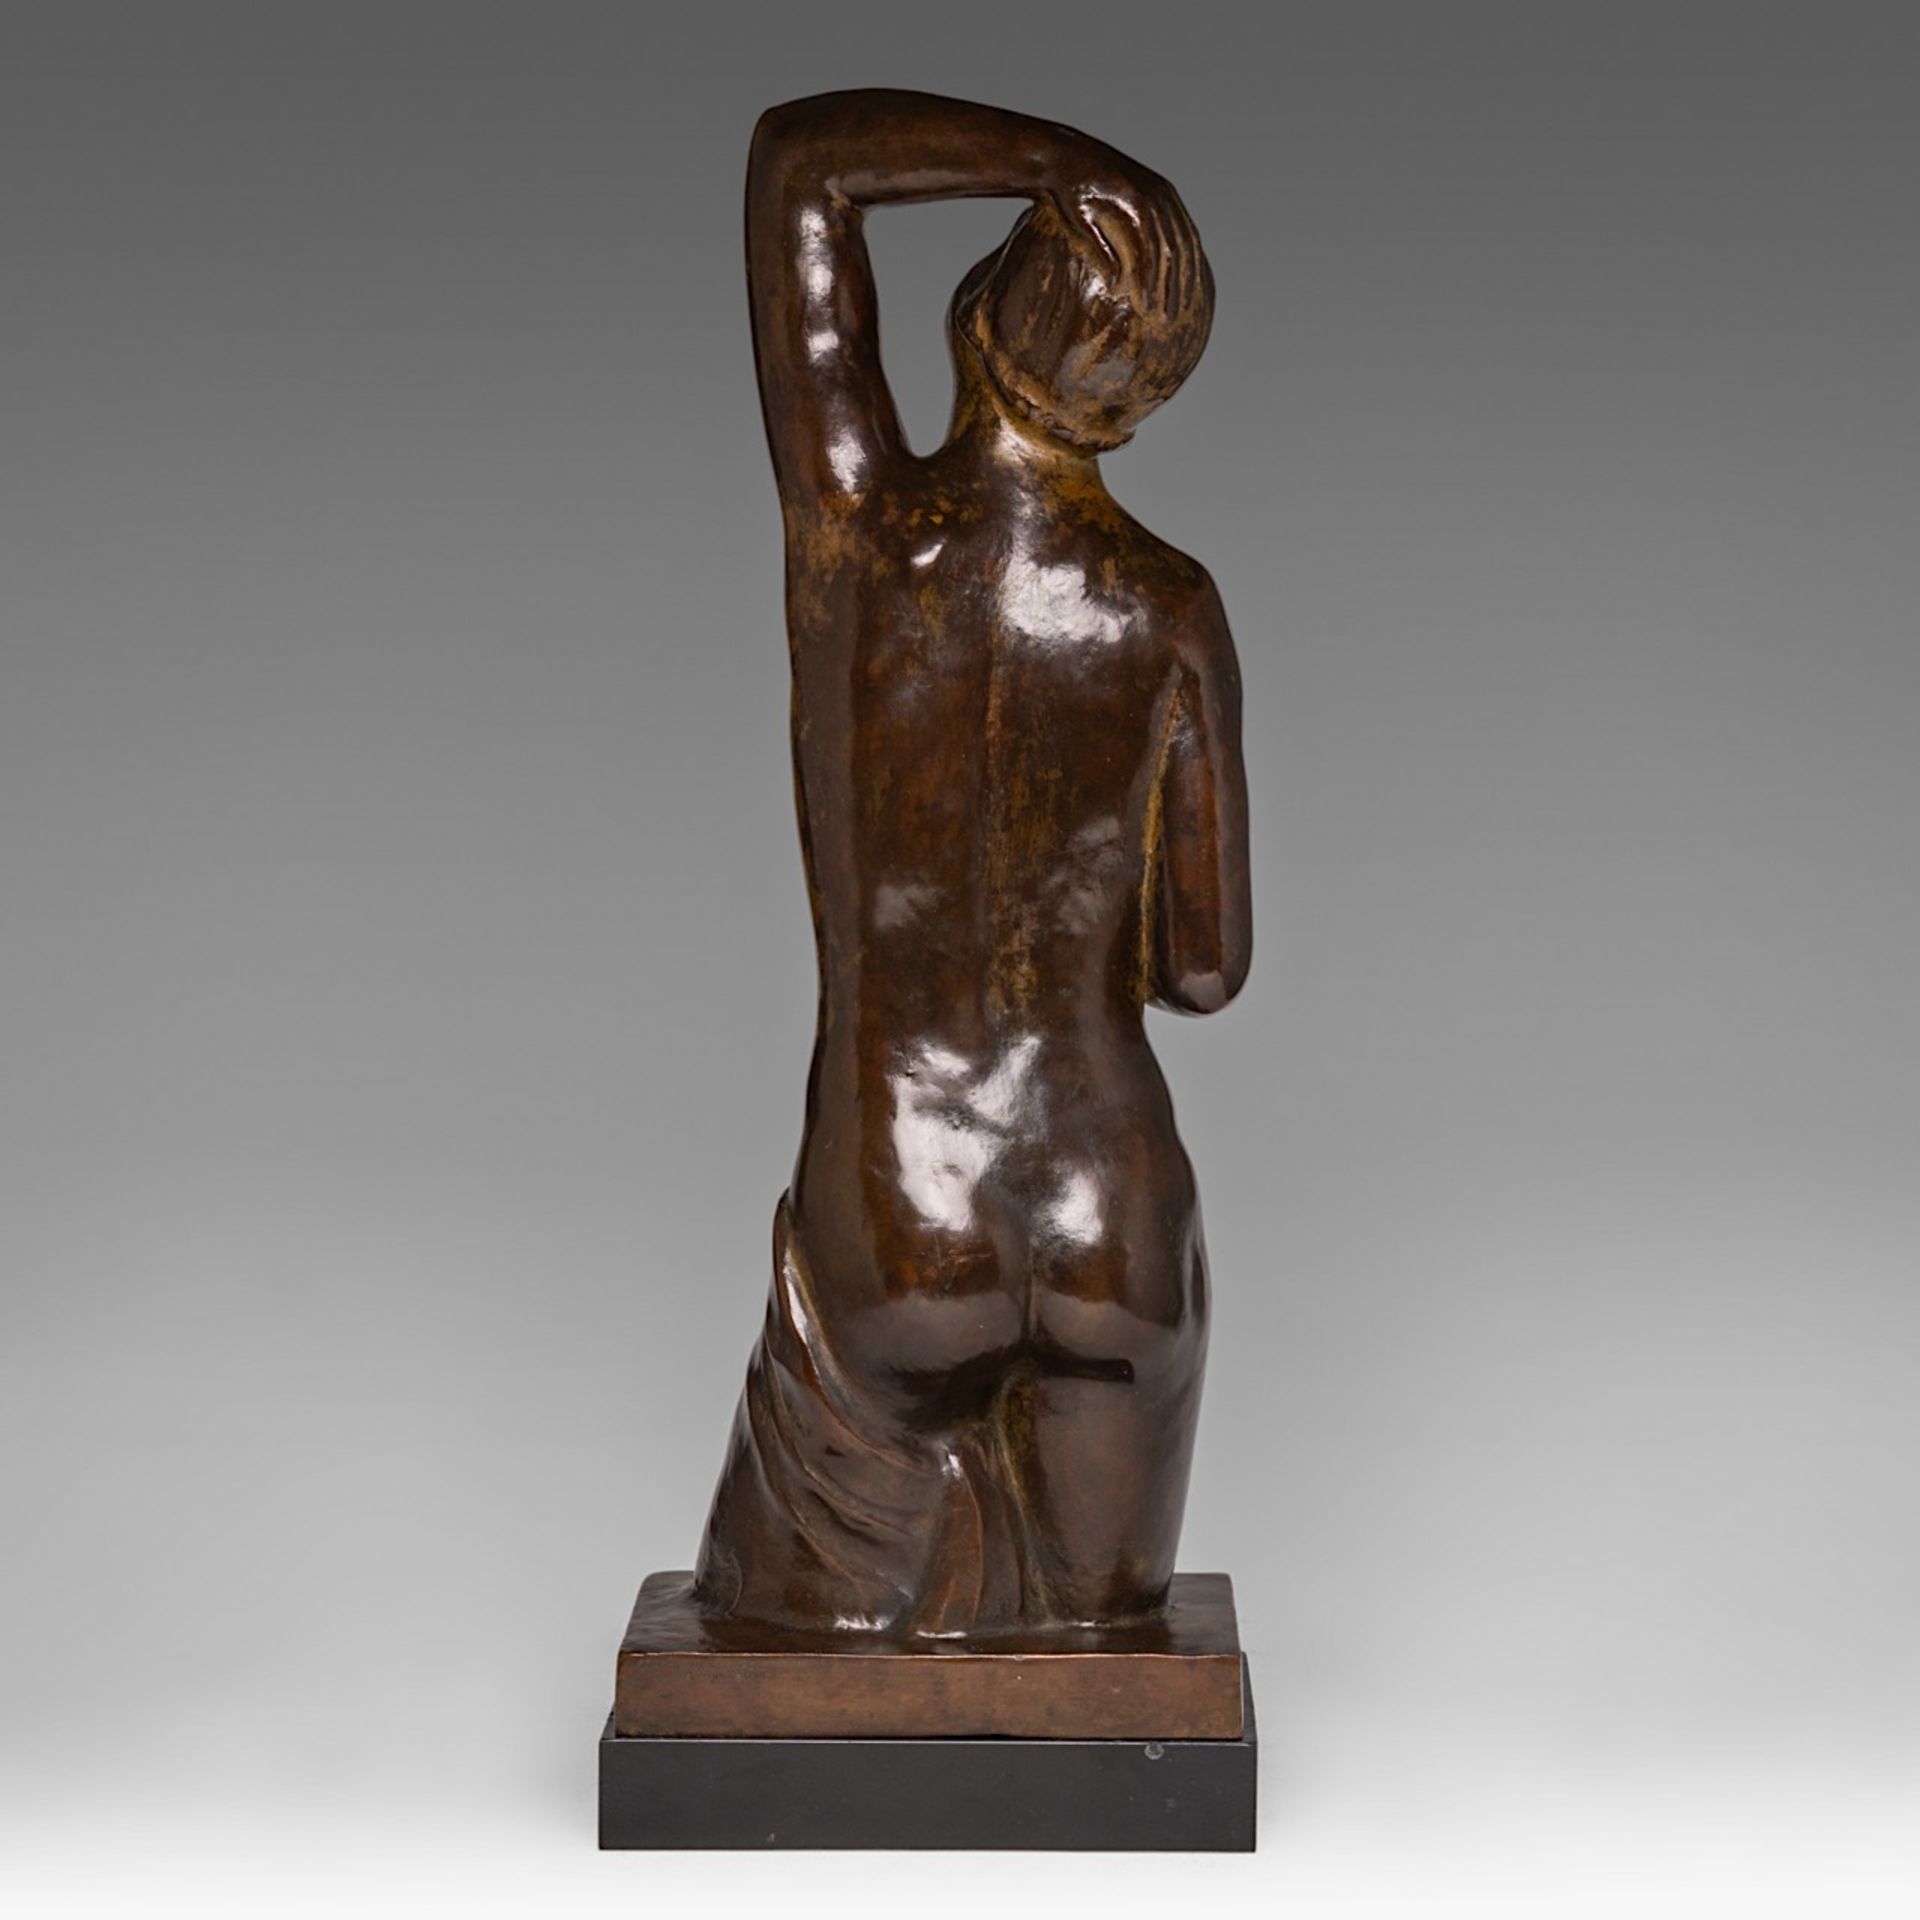 Leon Sarteel (1882-1942), Baigneuse, patinated bronze, casted by G. Vindevogel, Zwijnaarde, H 58 cm - Bild 5 aus 7